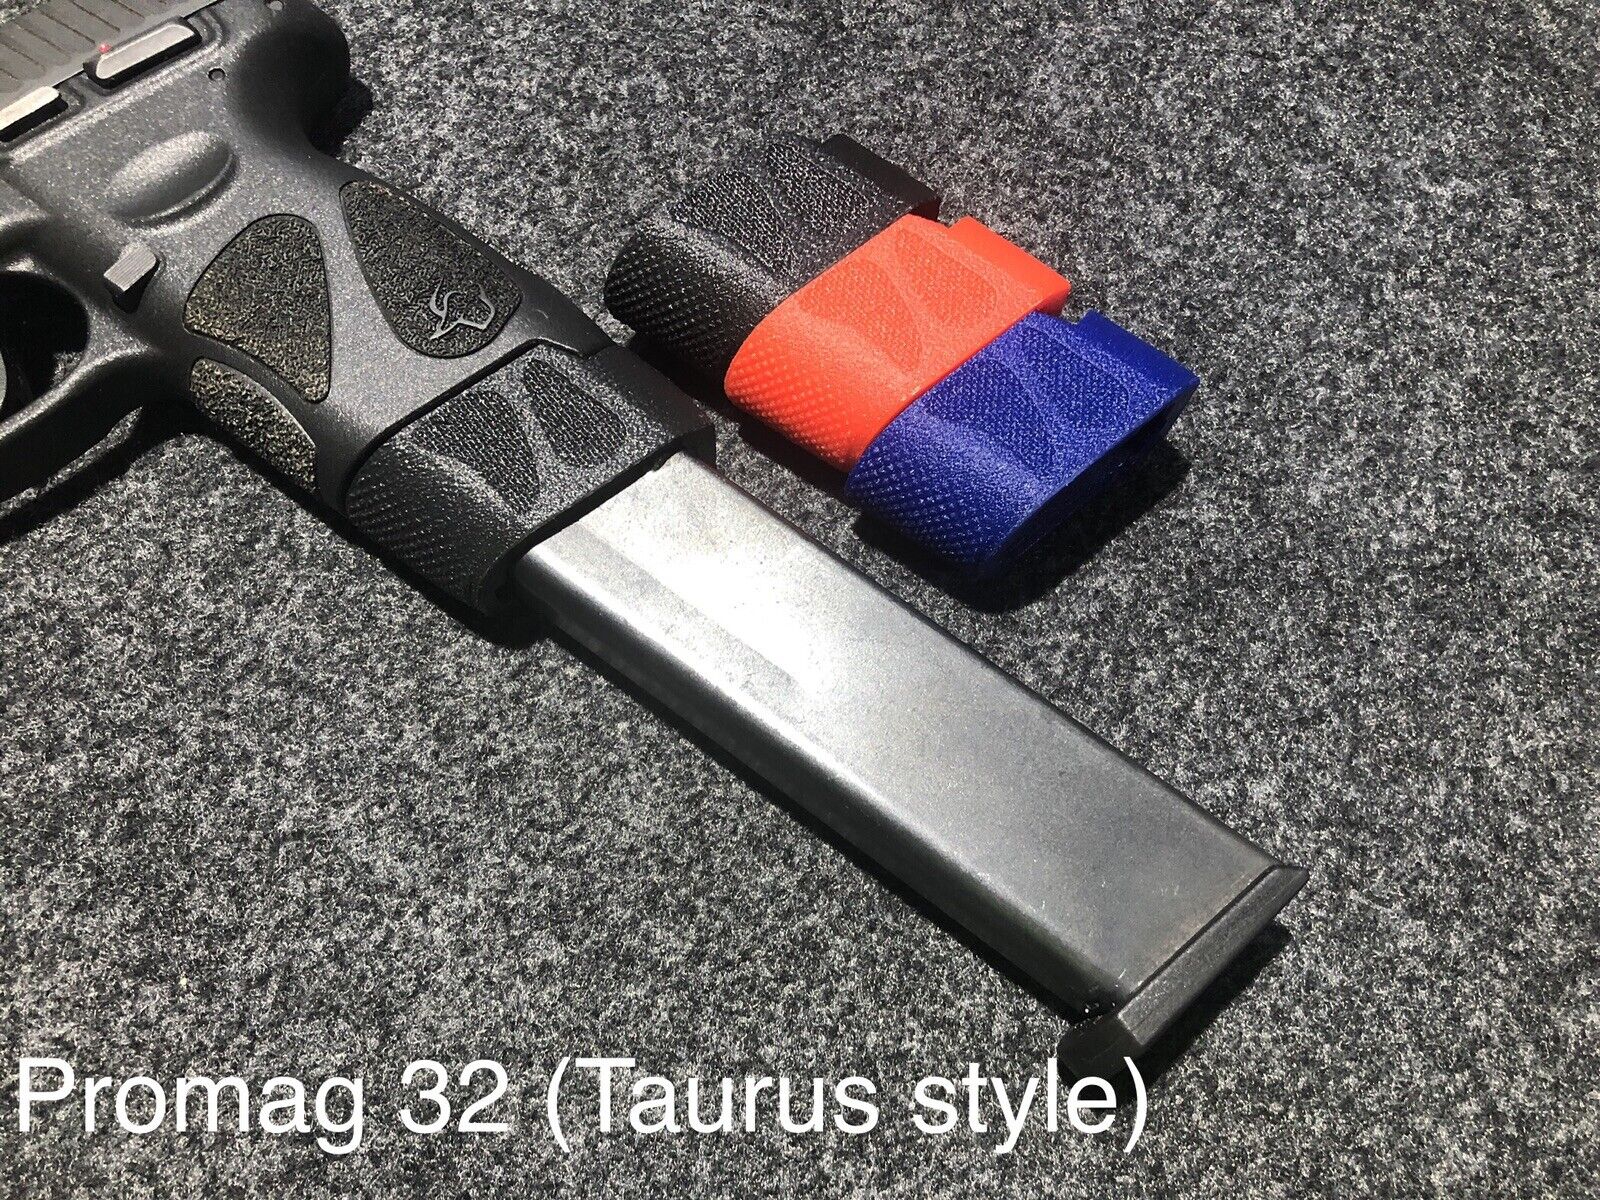 BloodyWheels "Sleeve" for Taurus G2C G3C PT111G2 9mm (READ ITEM DESCRIPTION) BloodyWheels Does Not Apply - фотография #7